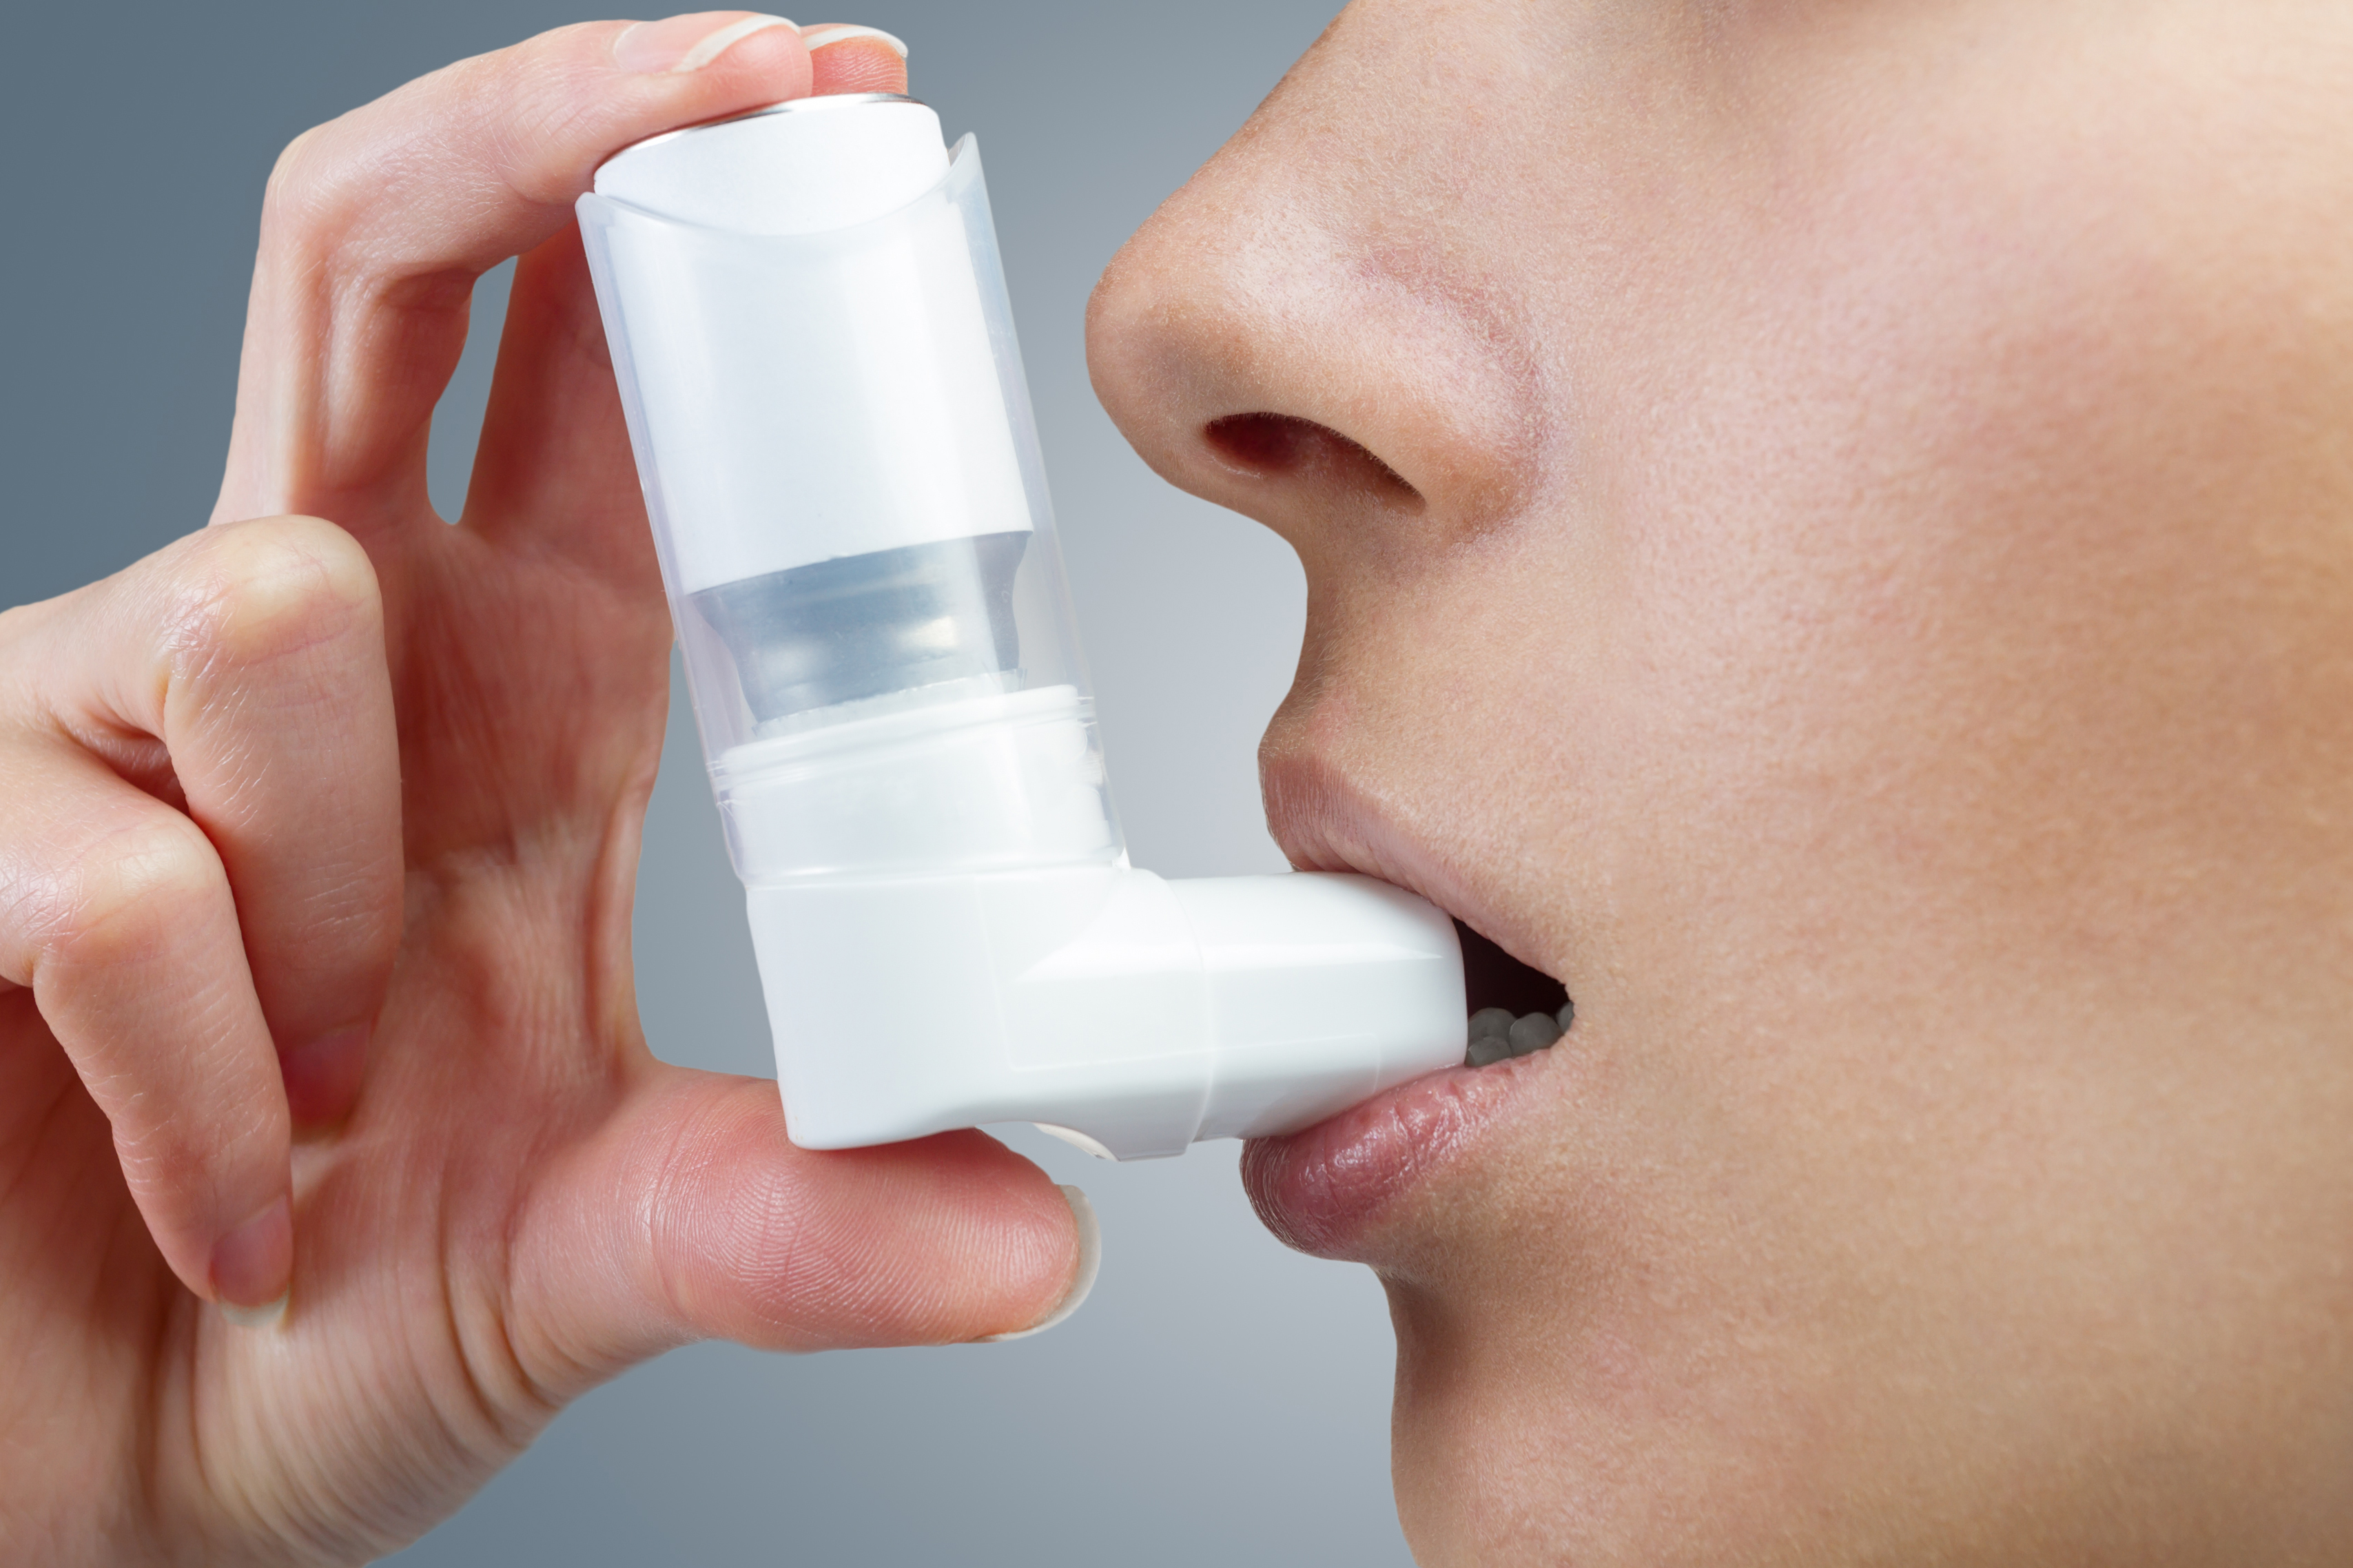  Asthma inhalers can help prevent attacks. (Photo: Shutterstock)